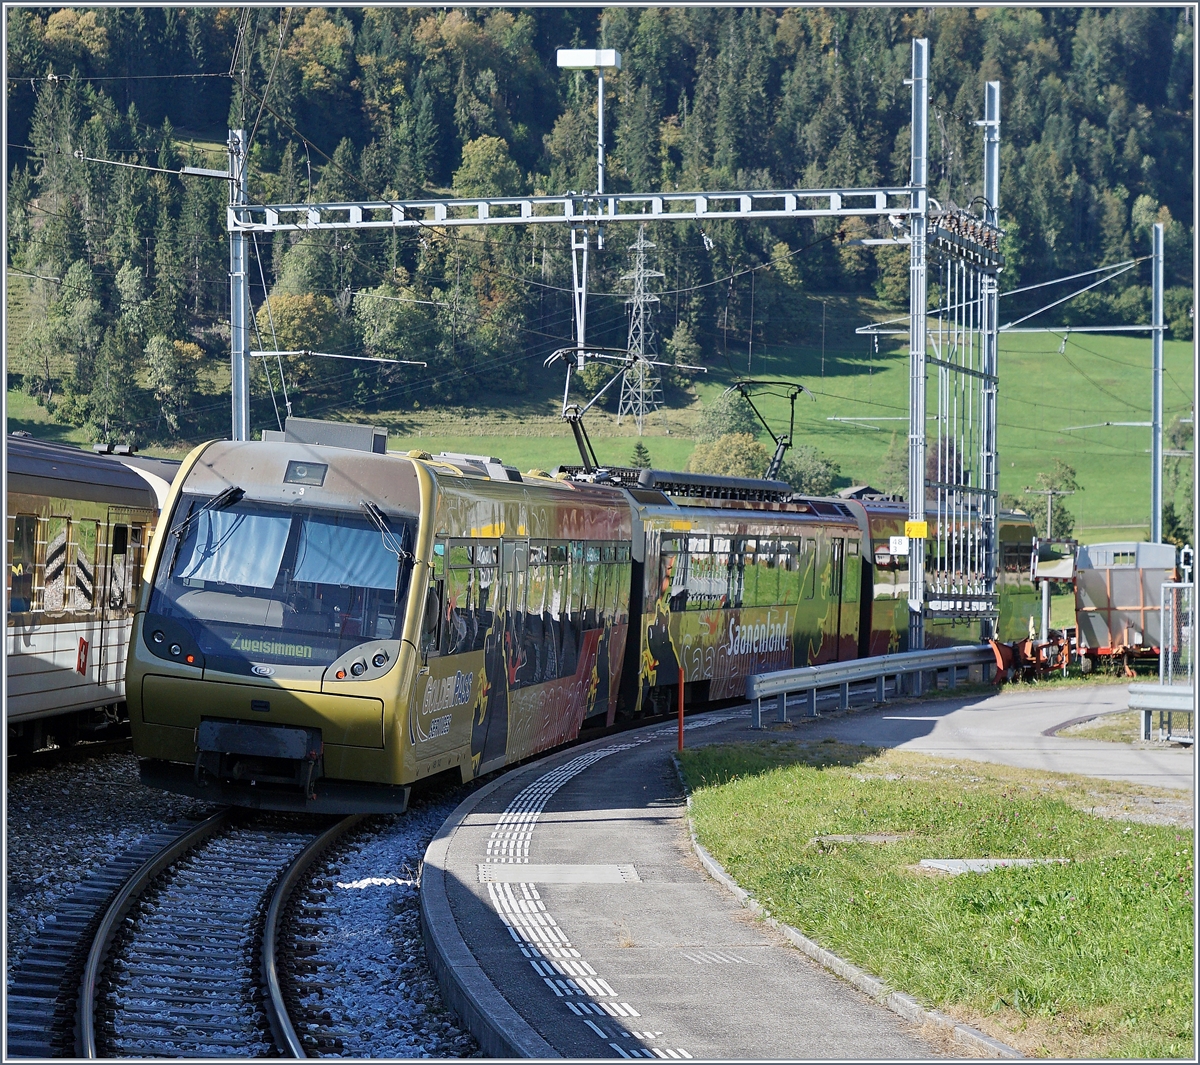 A MOB local train in Gruben.
30.09.2016